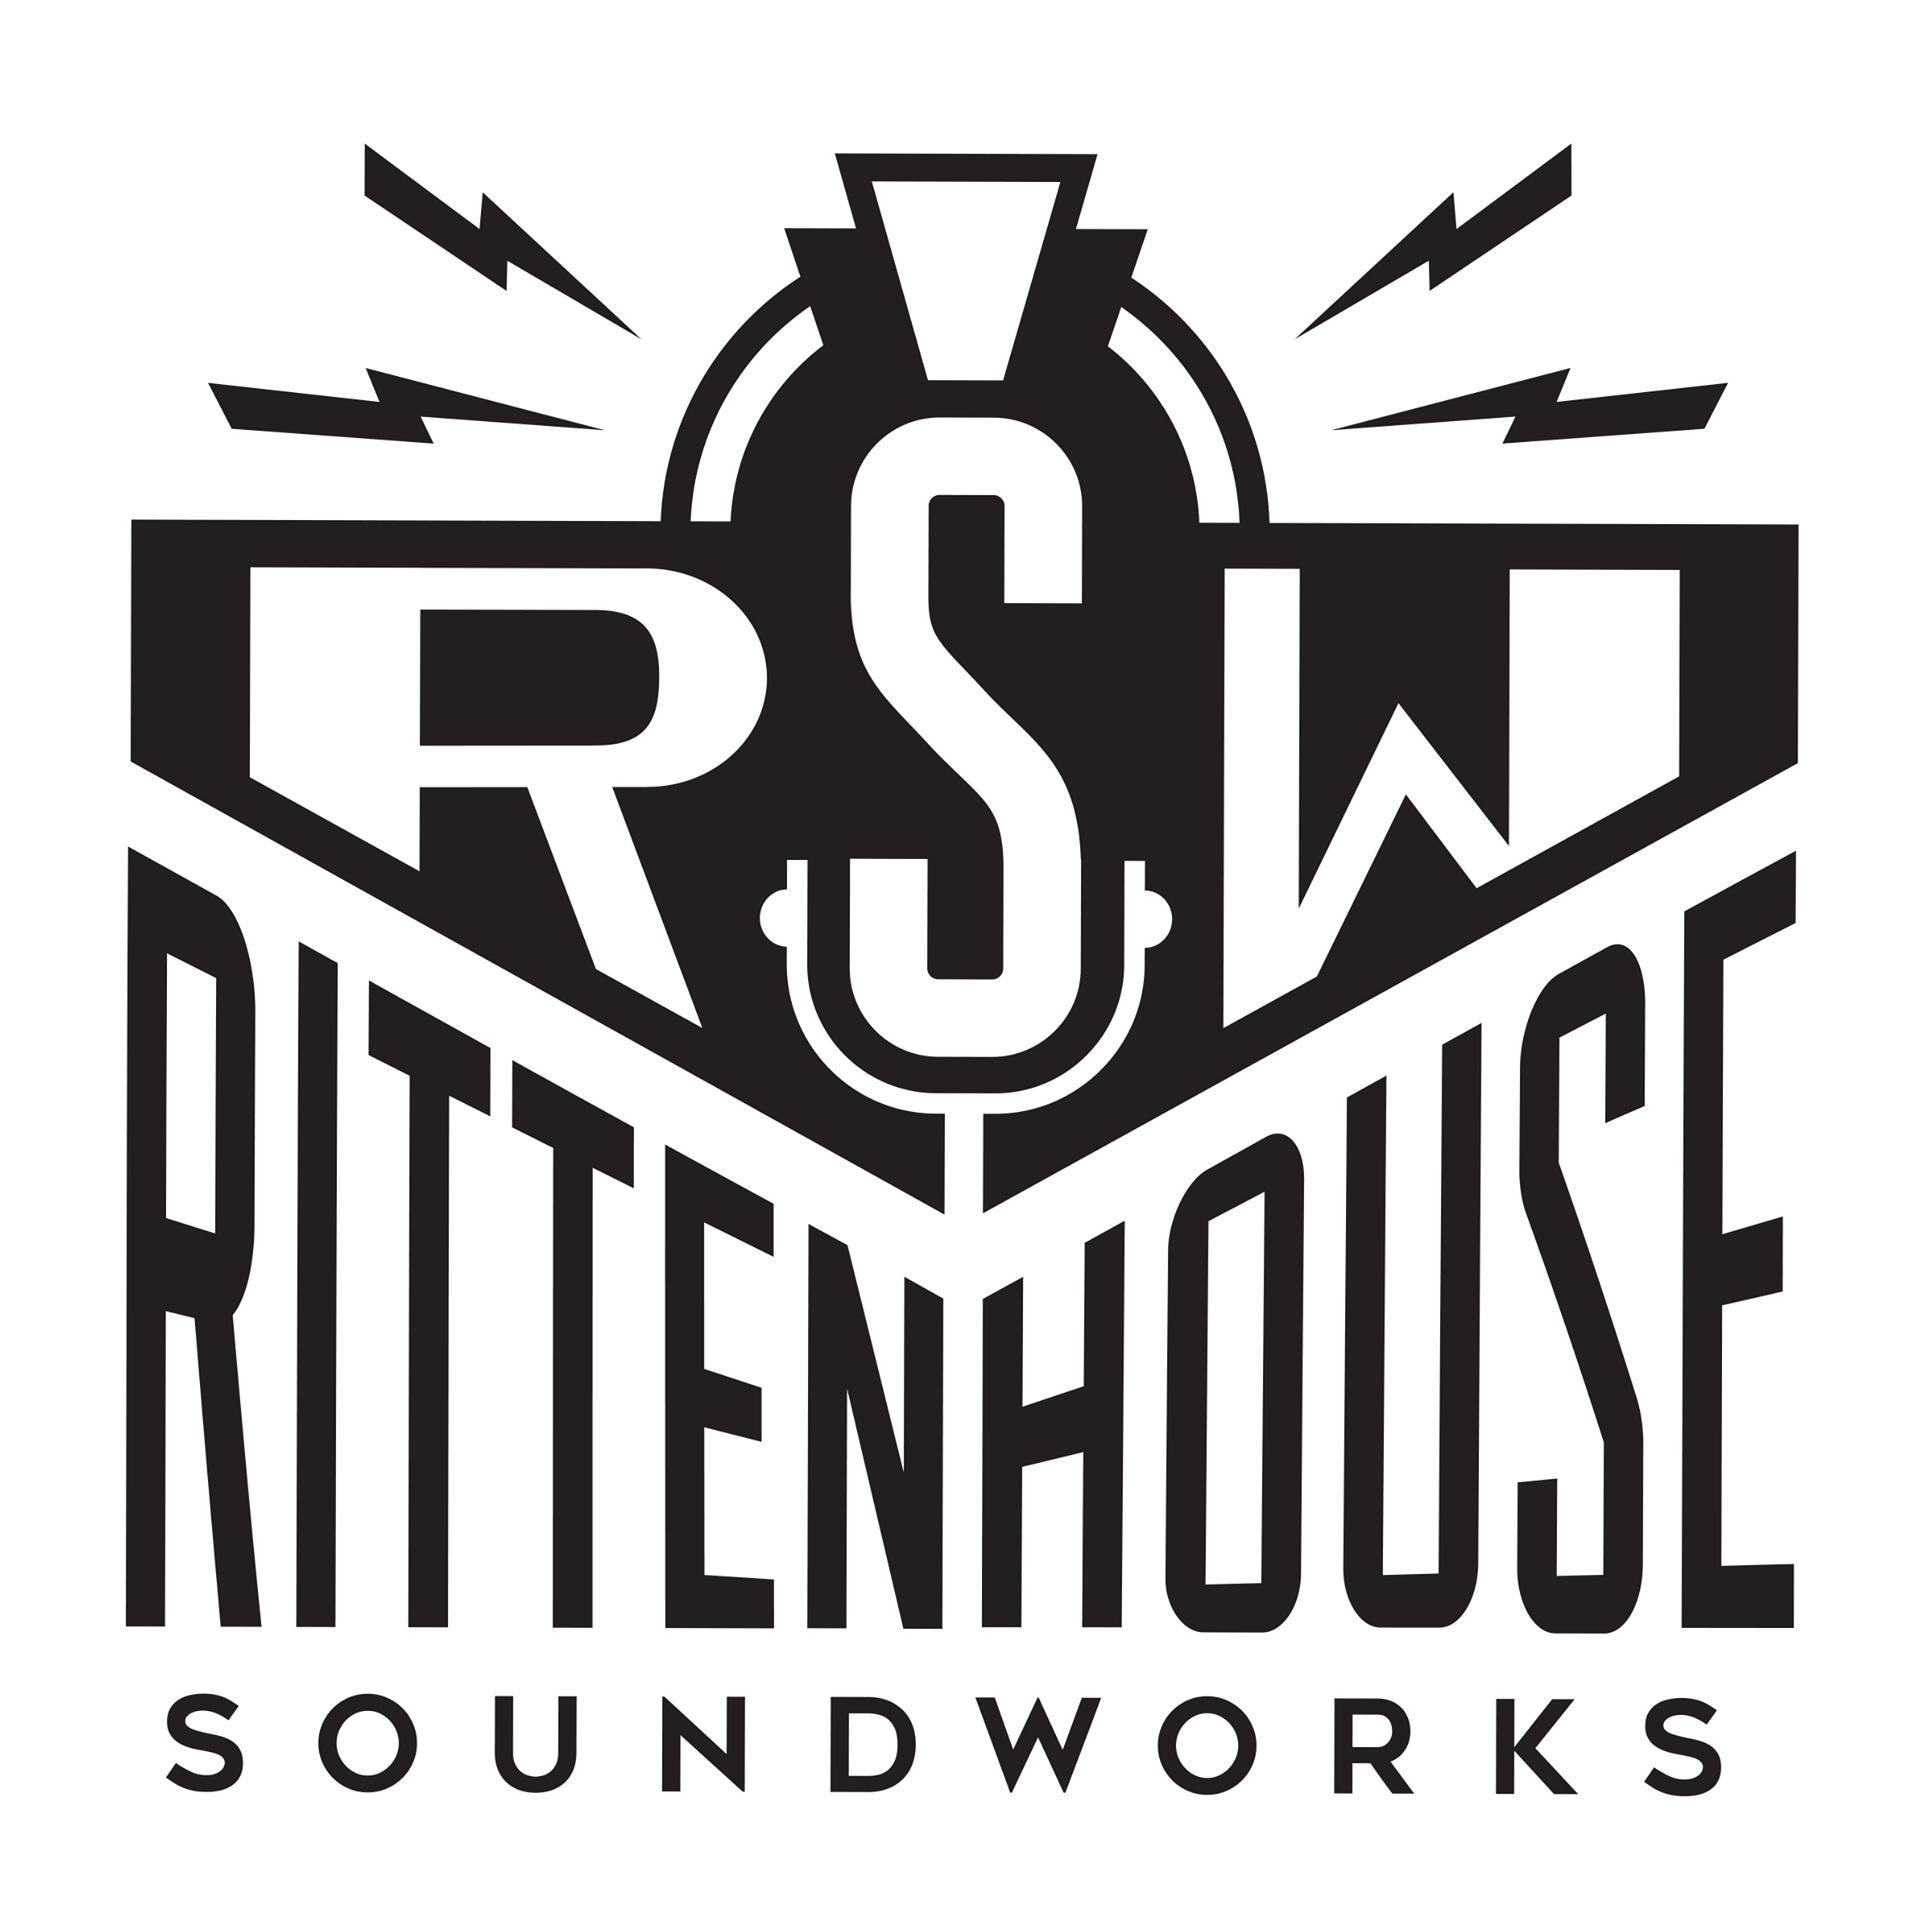 Rittenhouse Soundworks